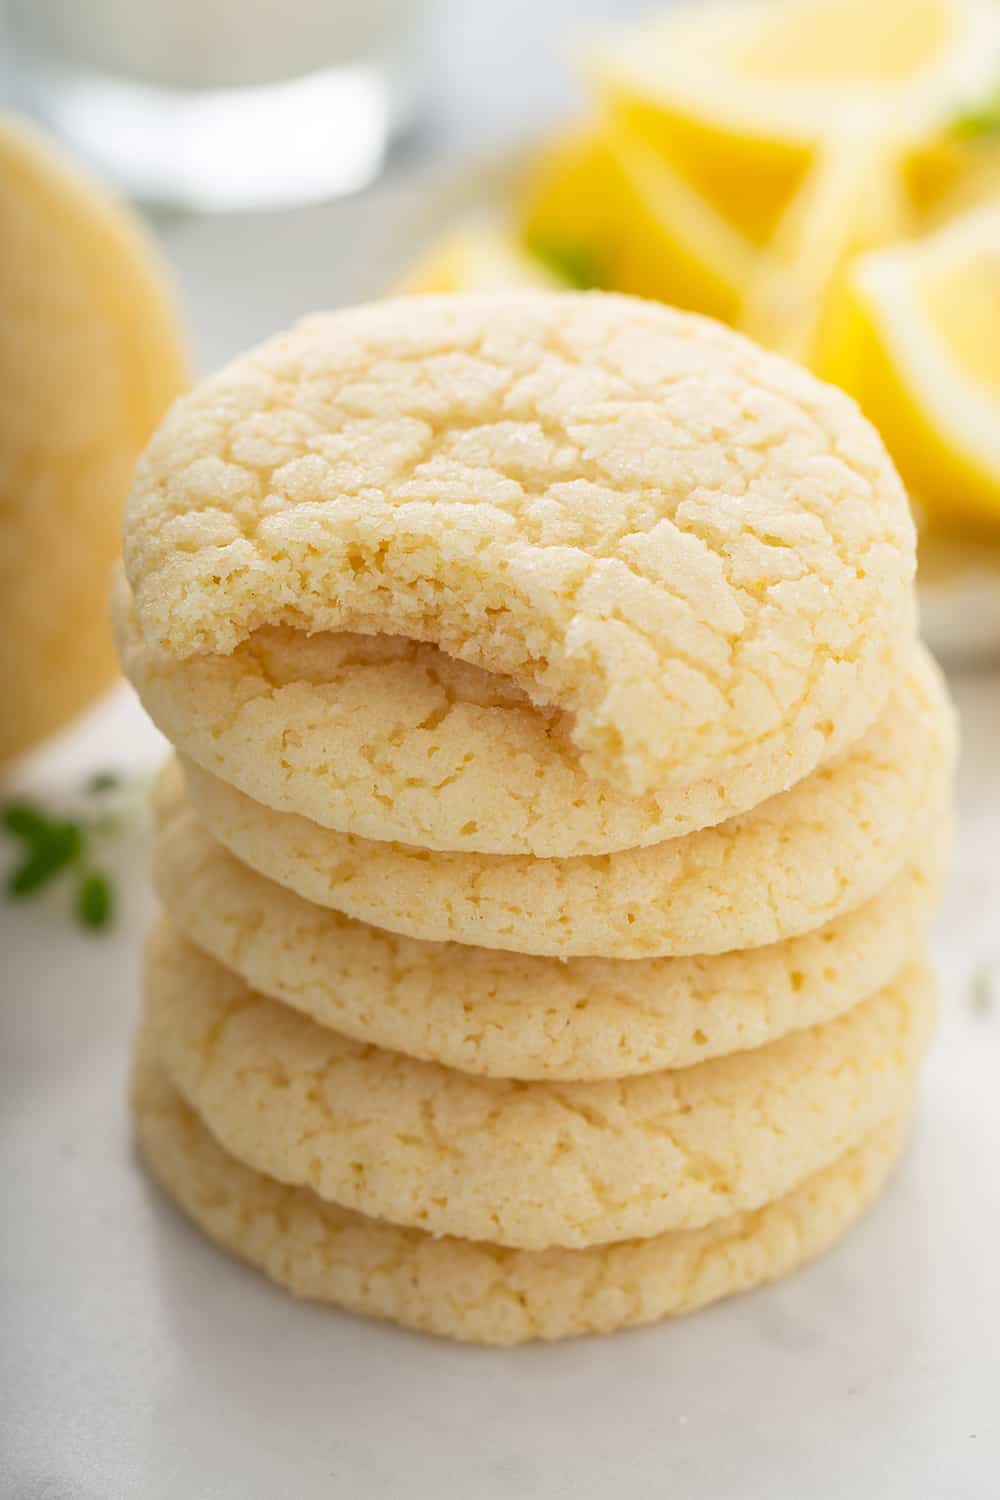 https://www.mybakingaddiction.com/wp-content/uploads/2010/05/stacked-lemon-sugar-cookies.jpg